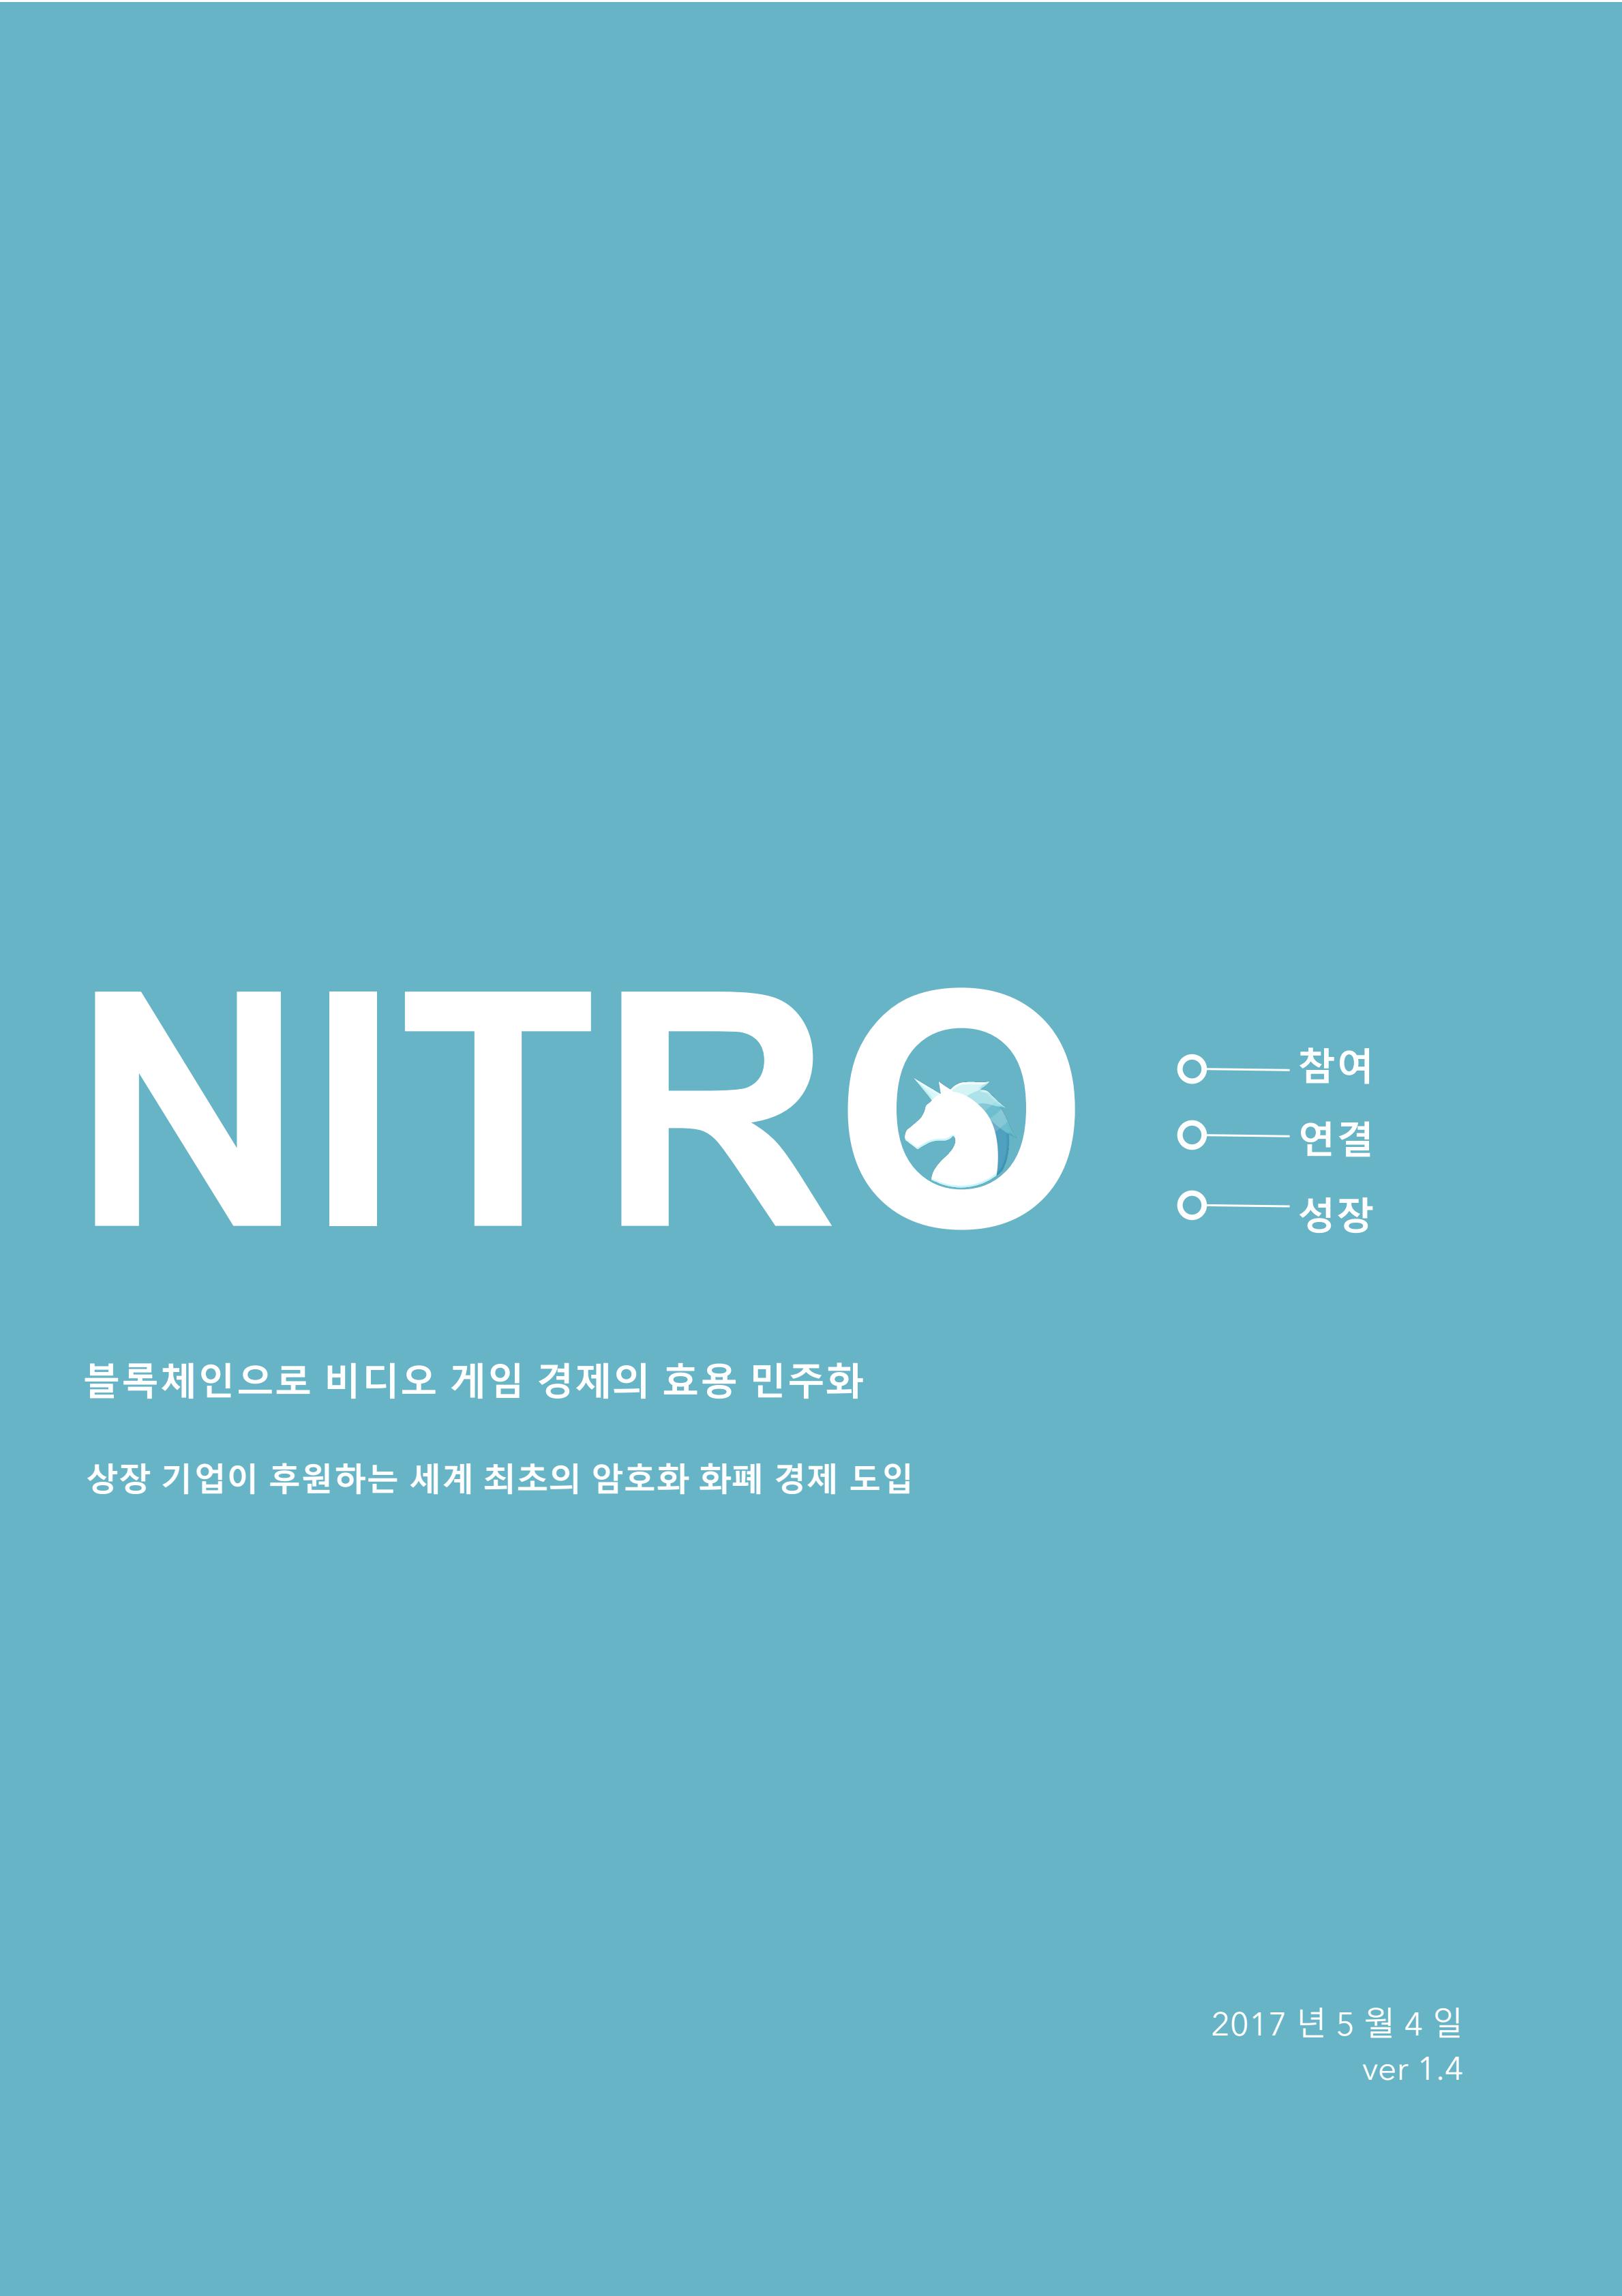 NOX_Nitro Whitepaper Final v1.4 (KR)_00.jpg